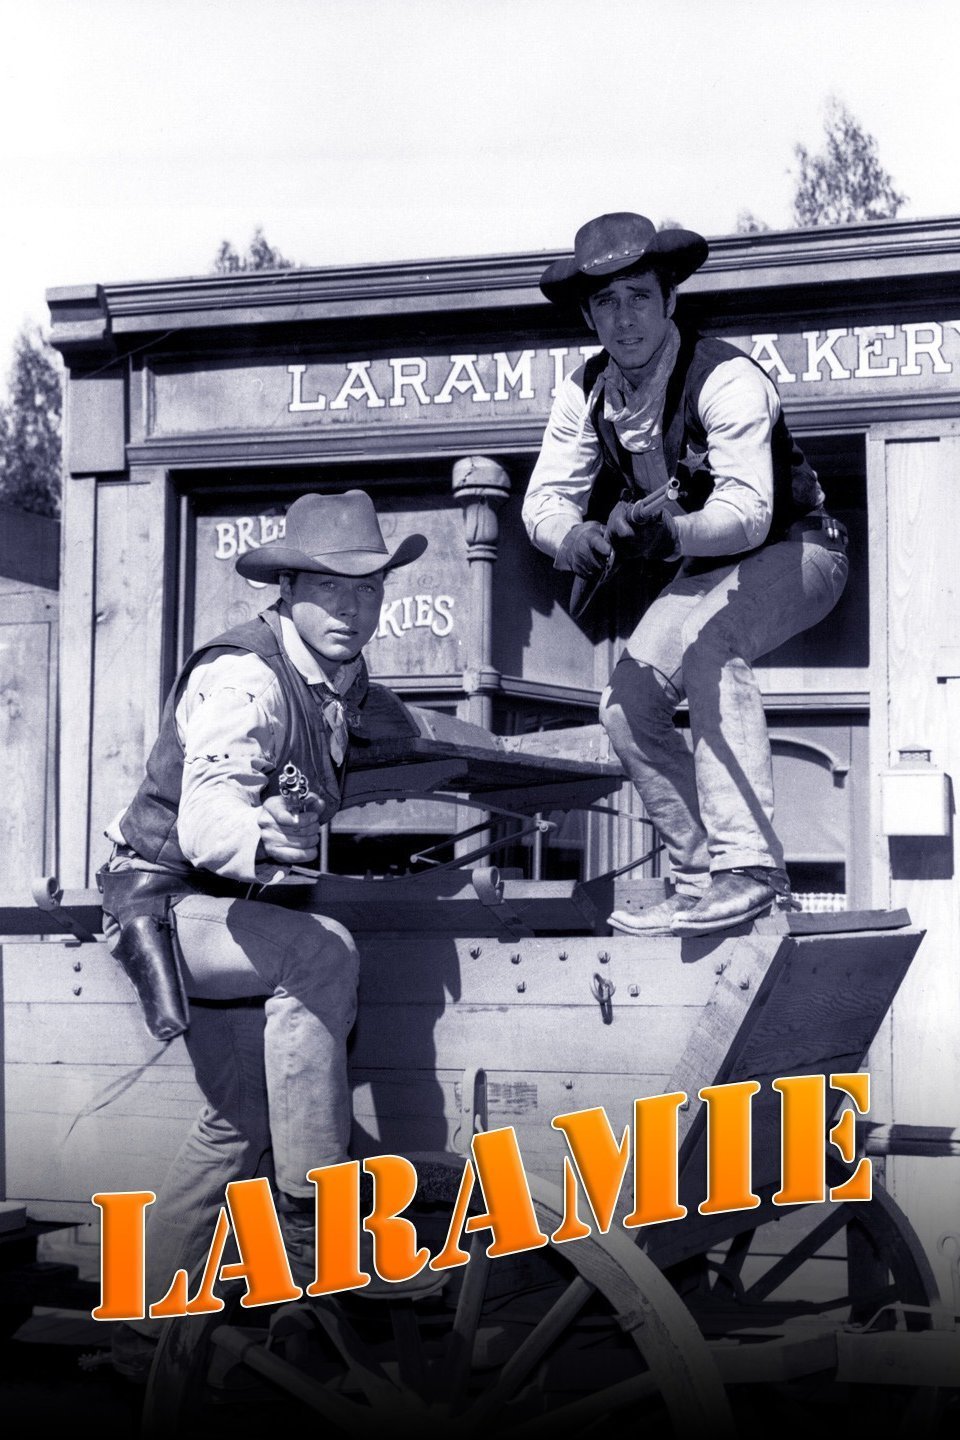 Laramie (TV series) wwwgstaticcomtvthumbtvbanners423726p423726